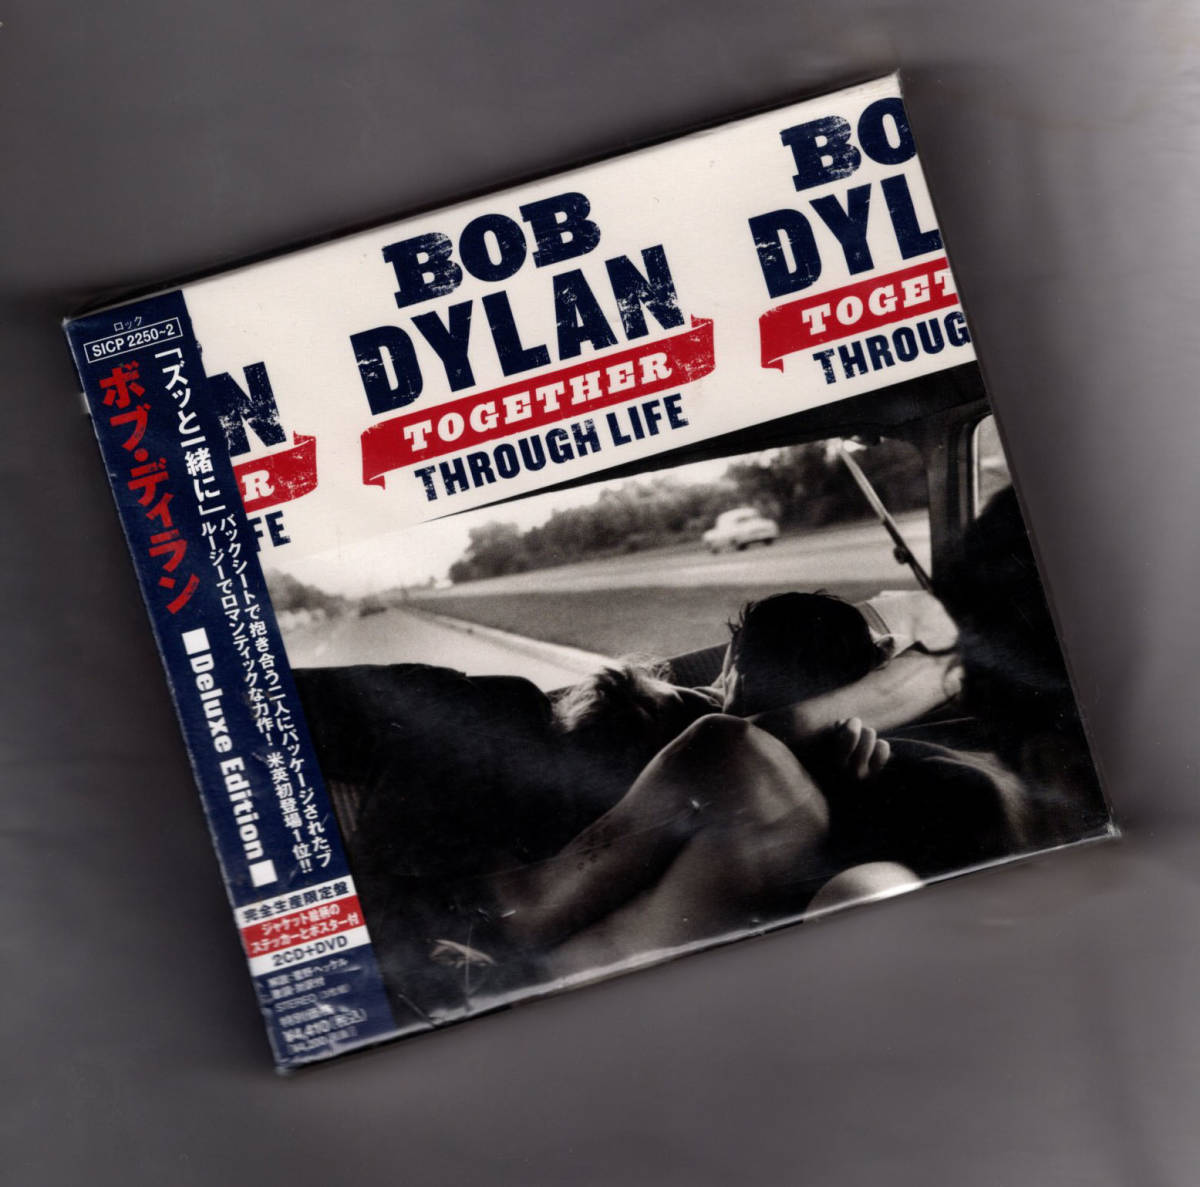  не использовался Together Through Life (2CD+DVD) Bob Dylan ( Bob *ti Ran )tuge The -*s Roo * жизнь 